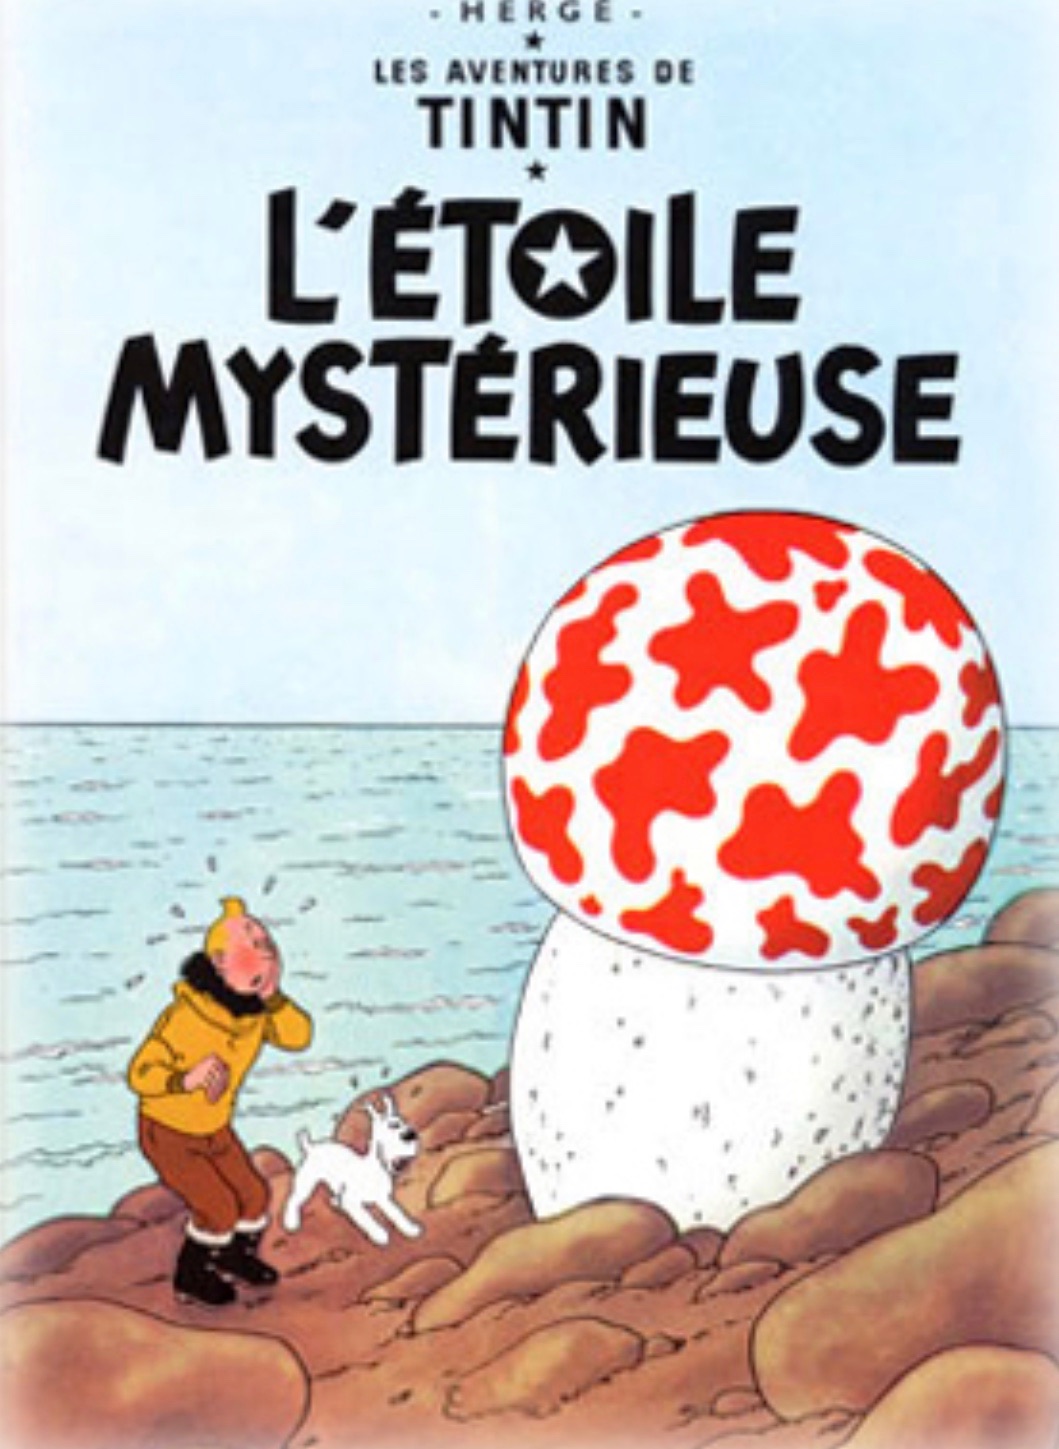 Tintin libros  Tintin, Bd tintin, Les aventures de tintin